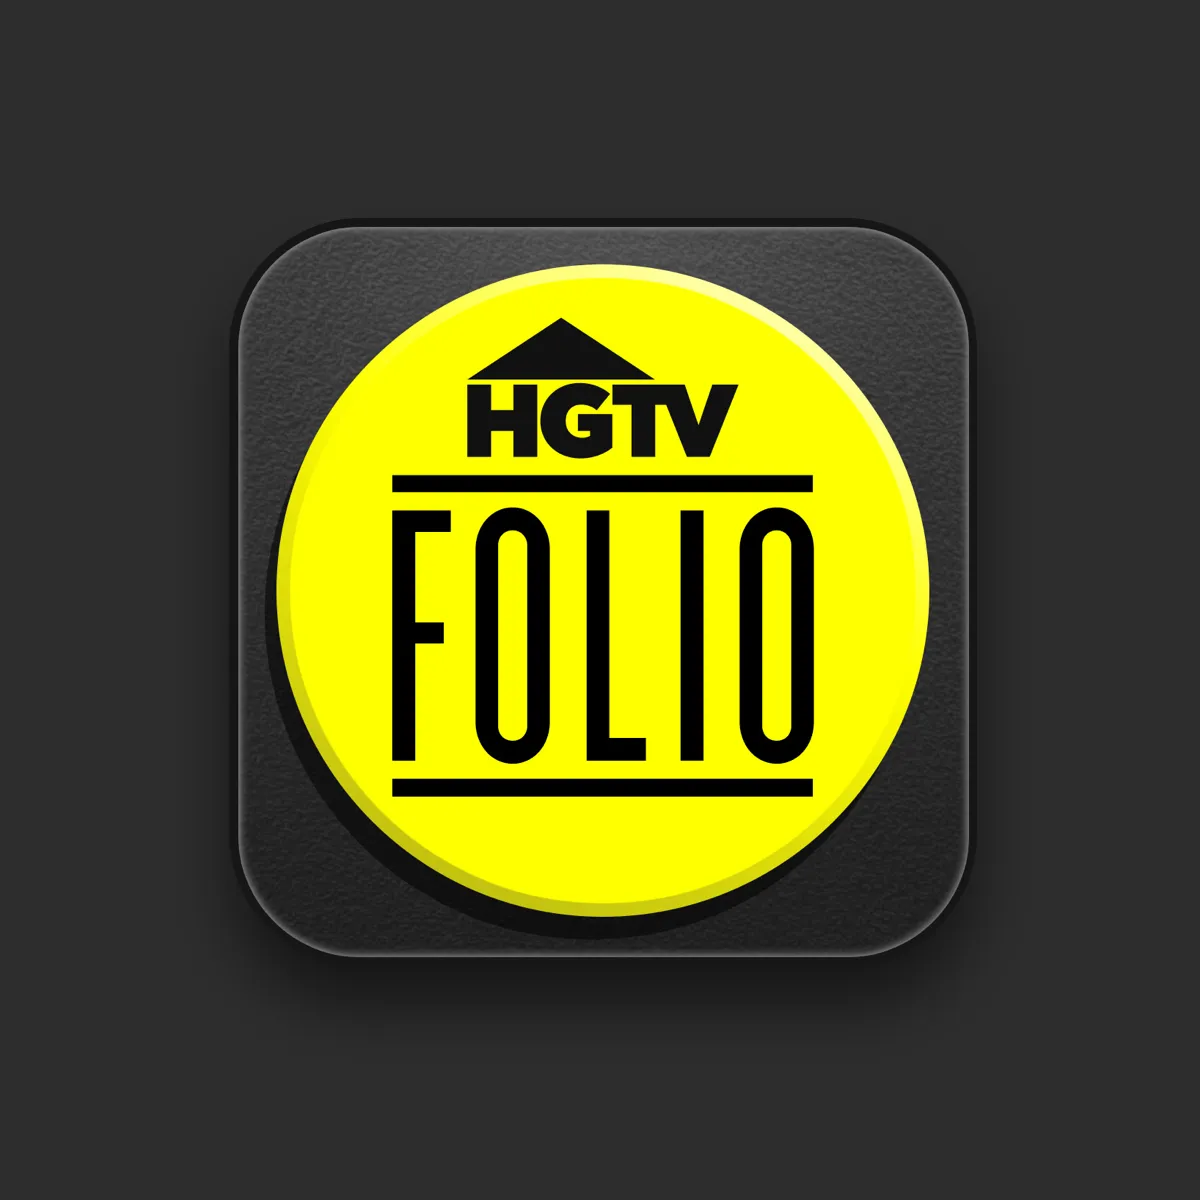 HGTV Folio app logo